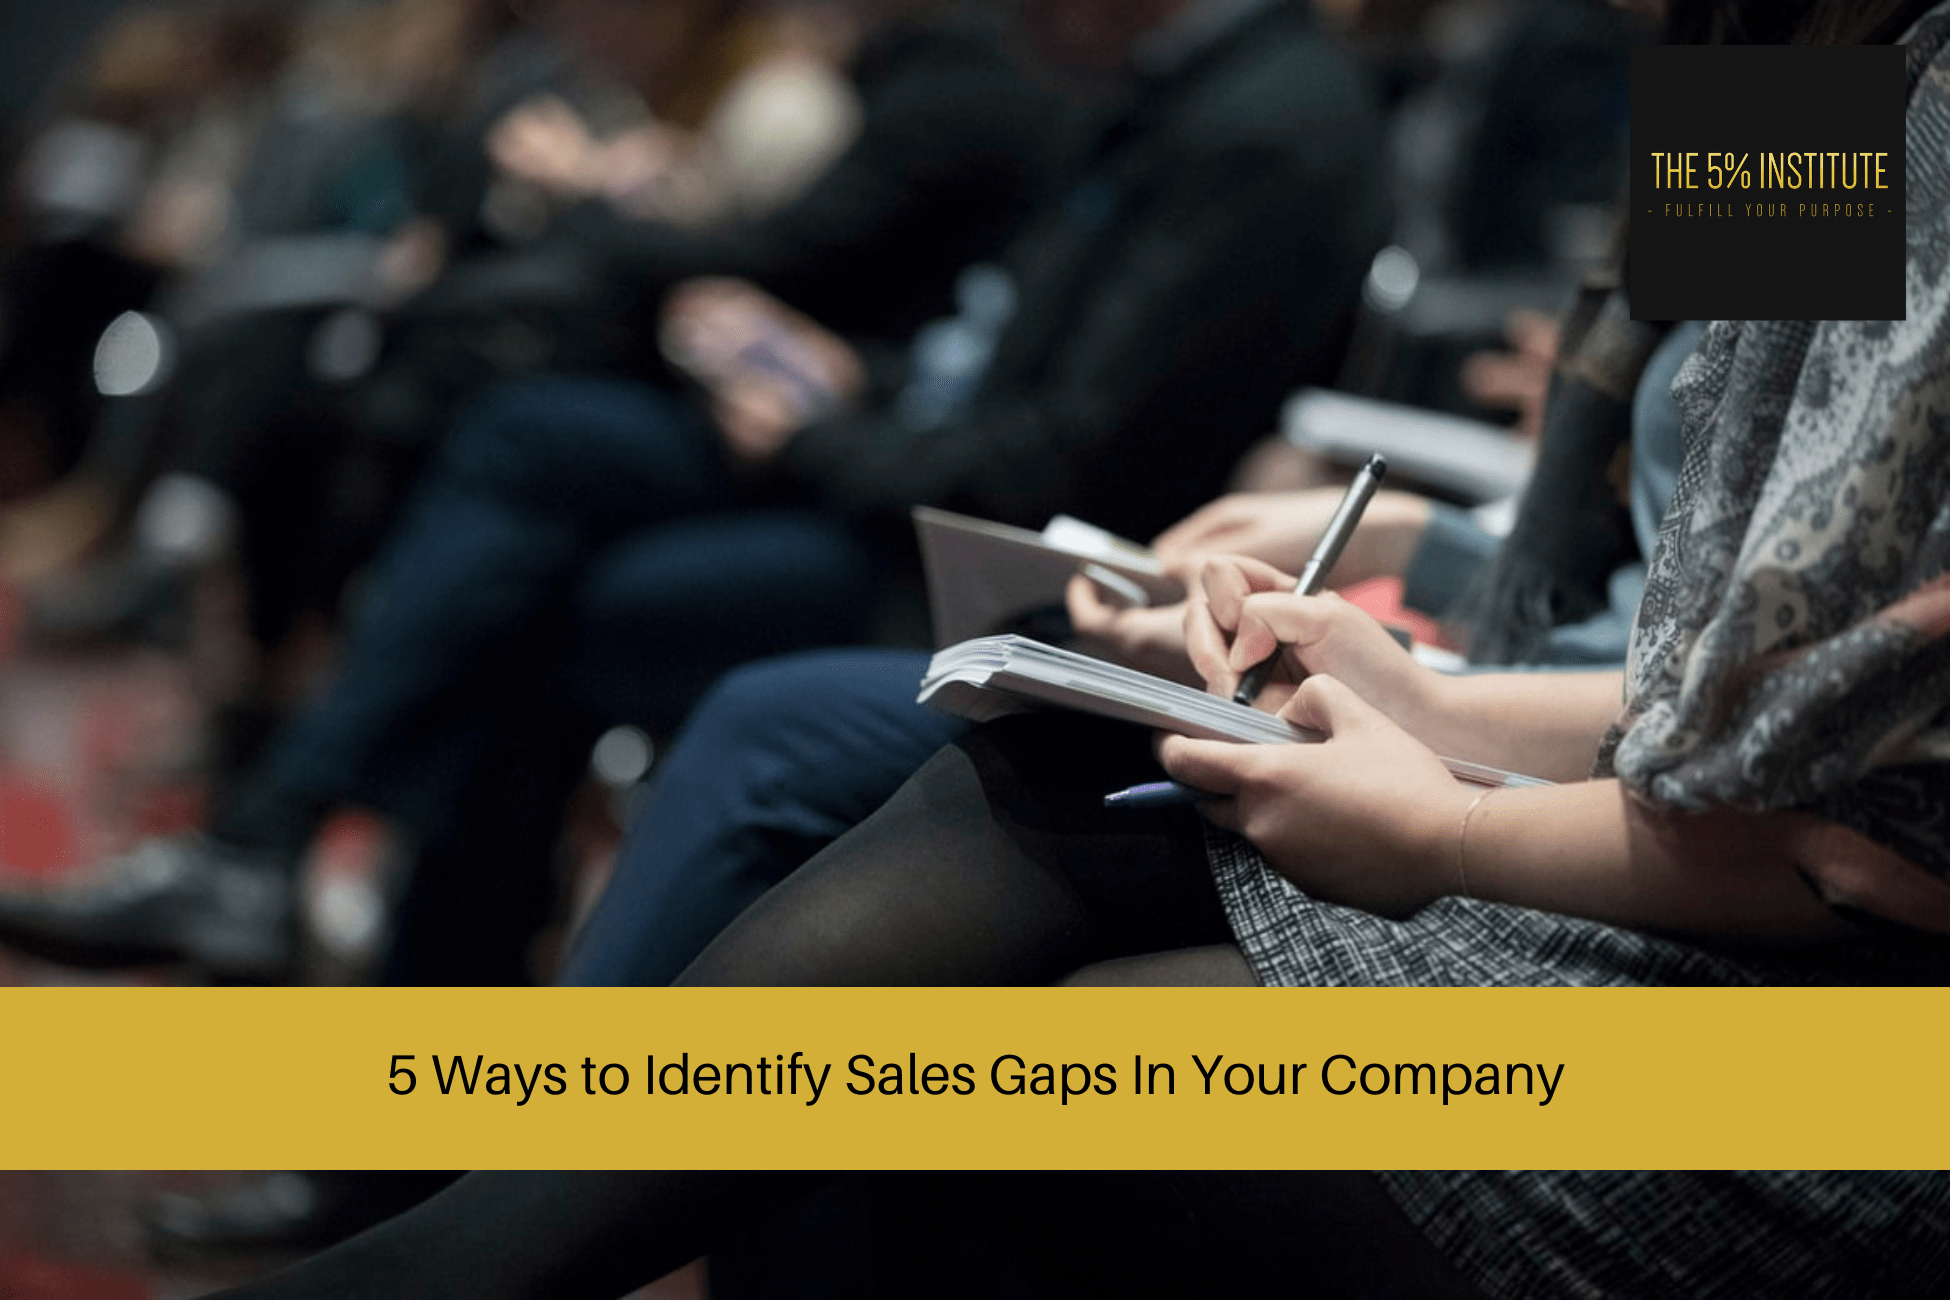 Identify Sales Gaps